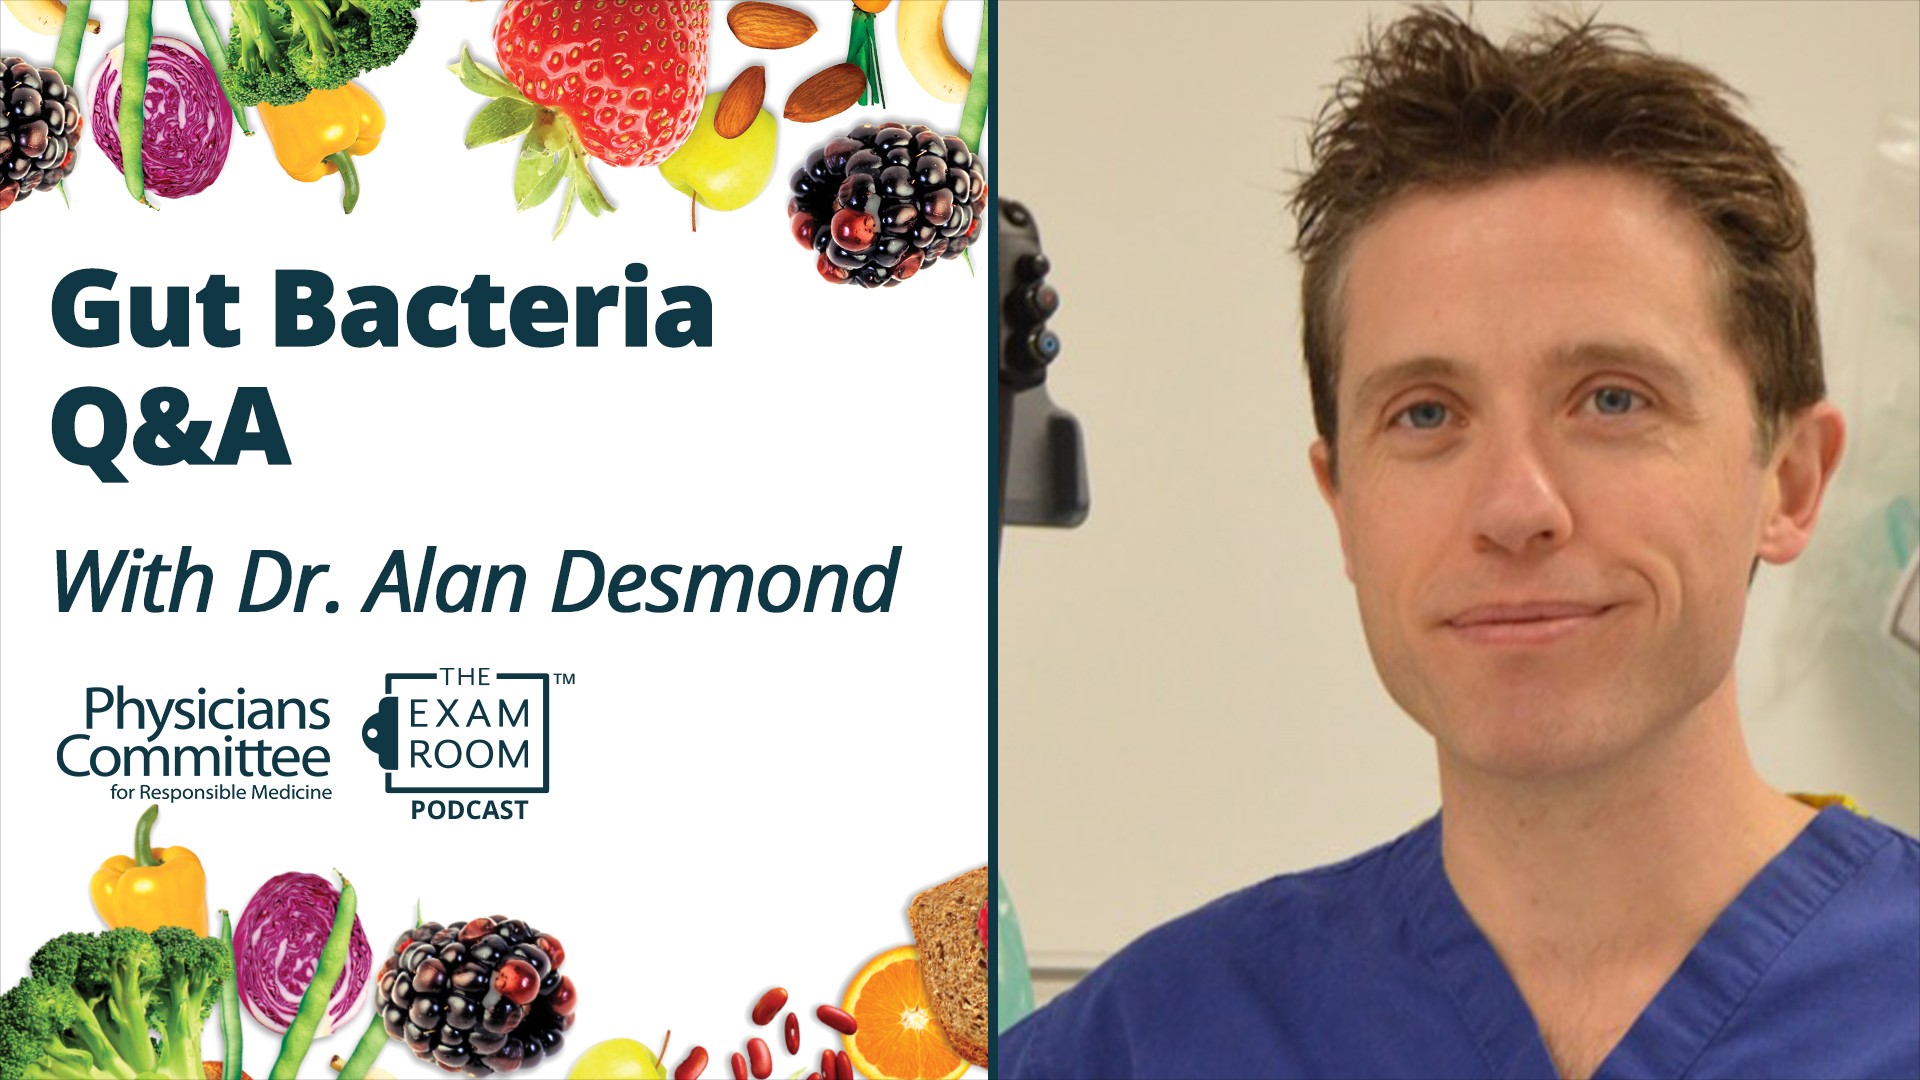 Gut Bacteria Q&A With Dr. Alan Desmond